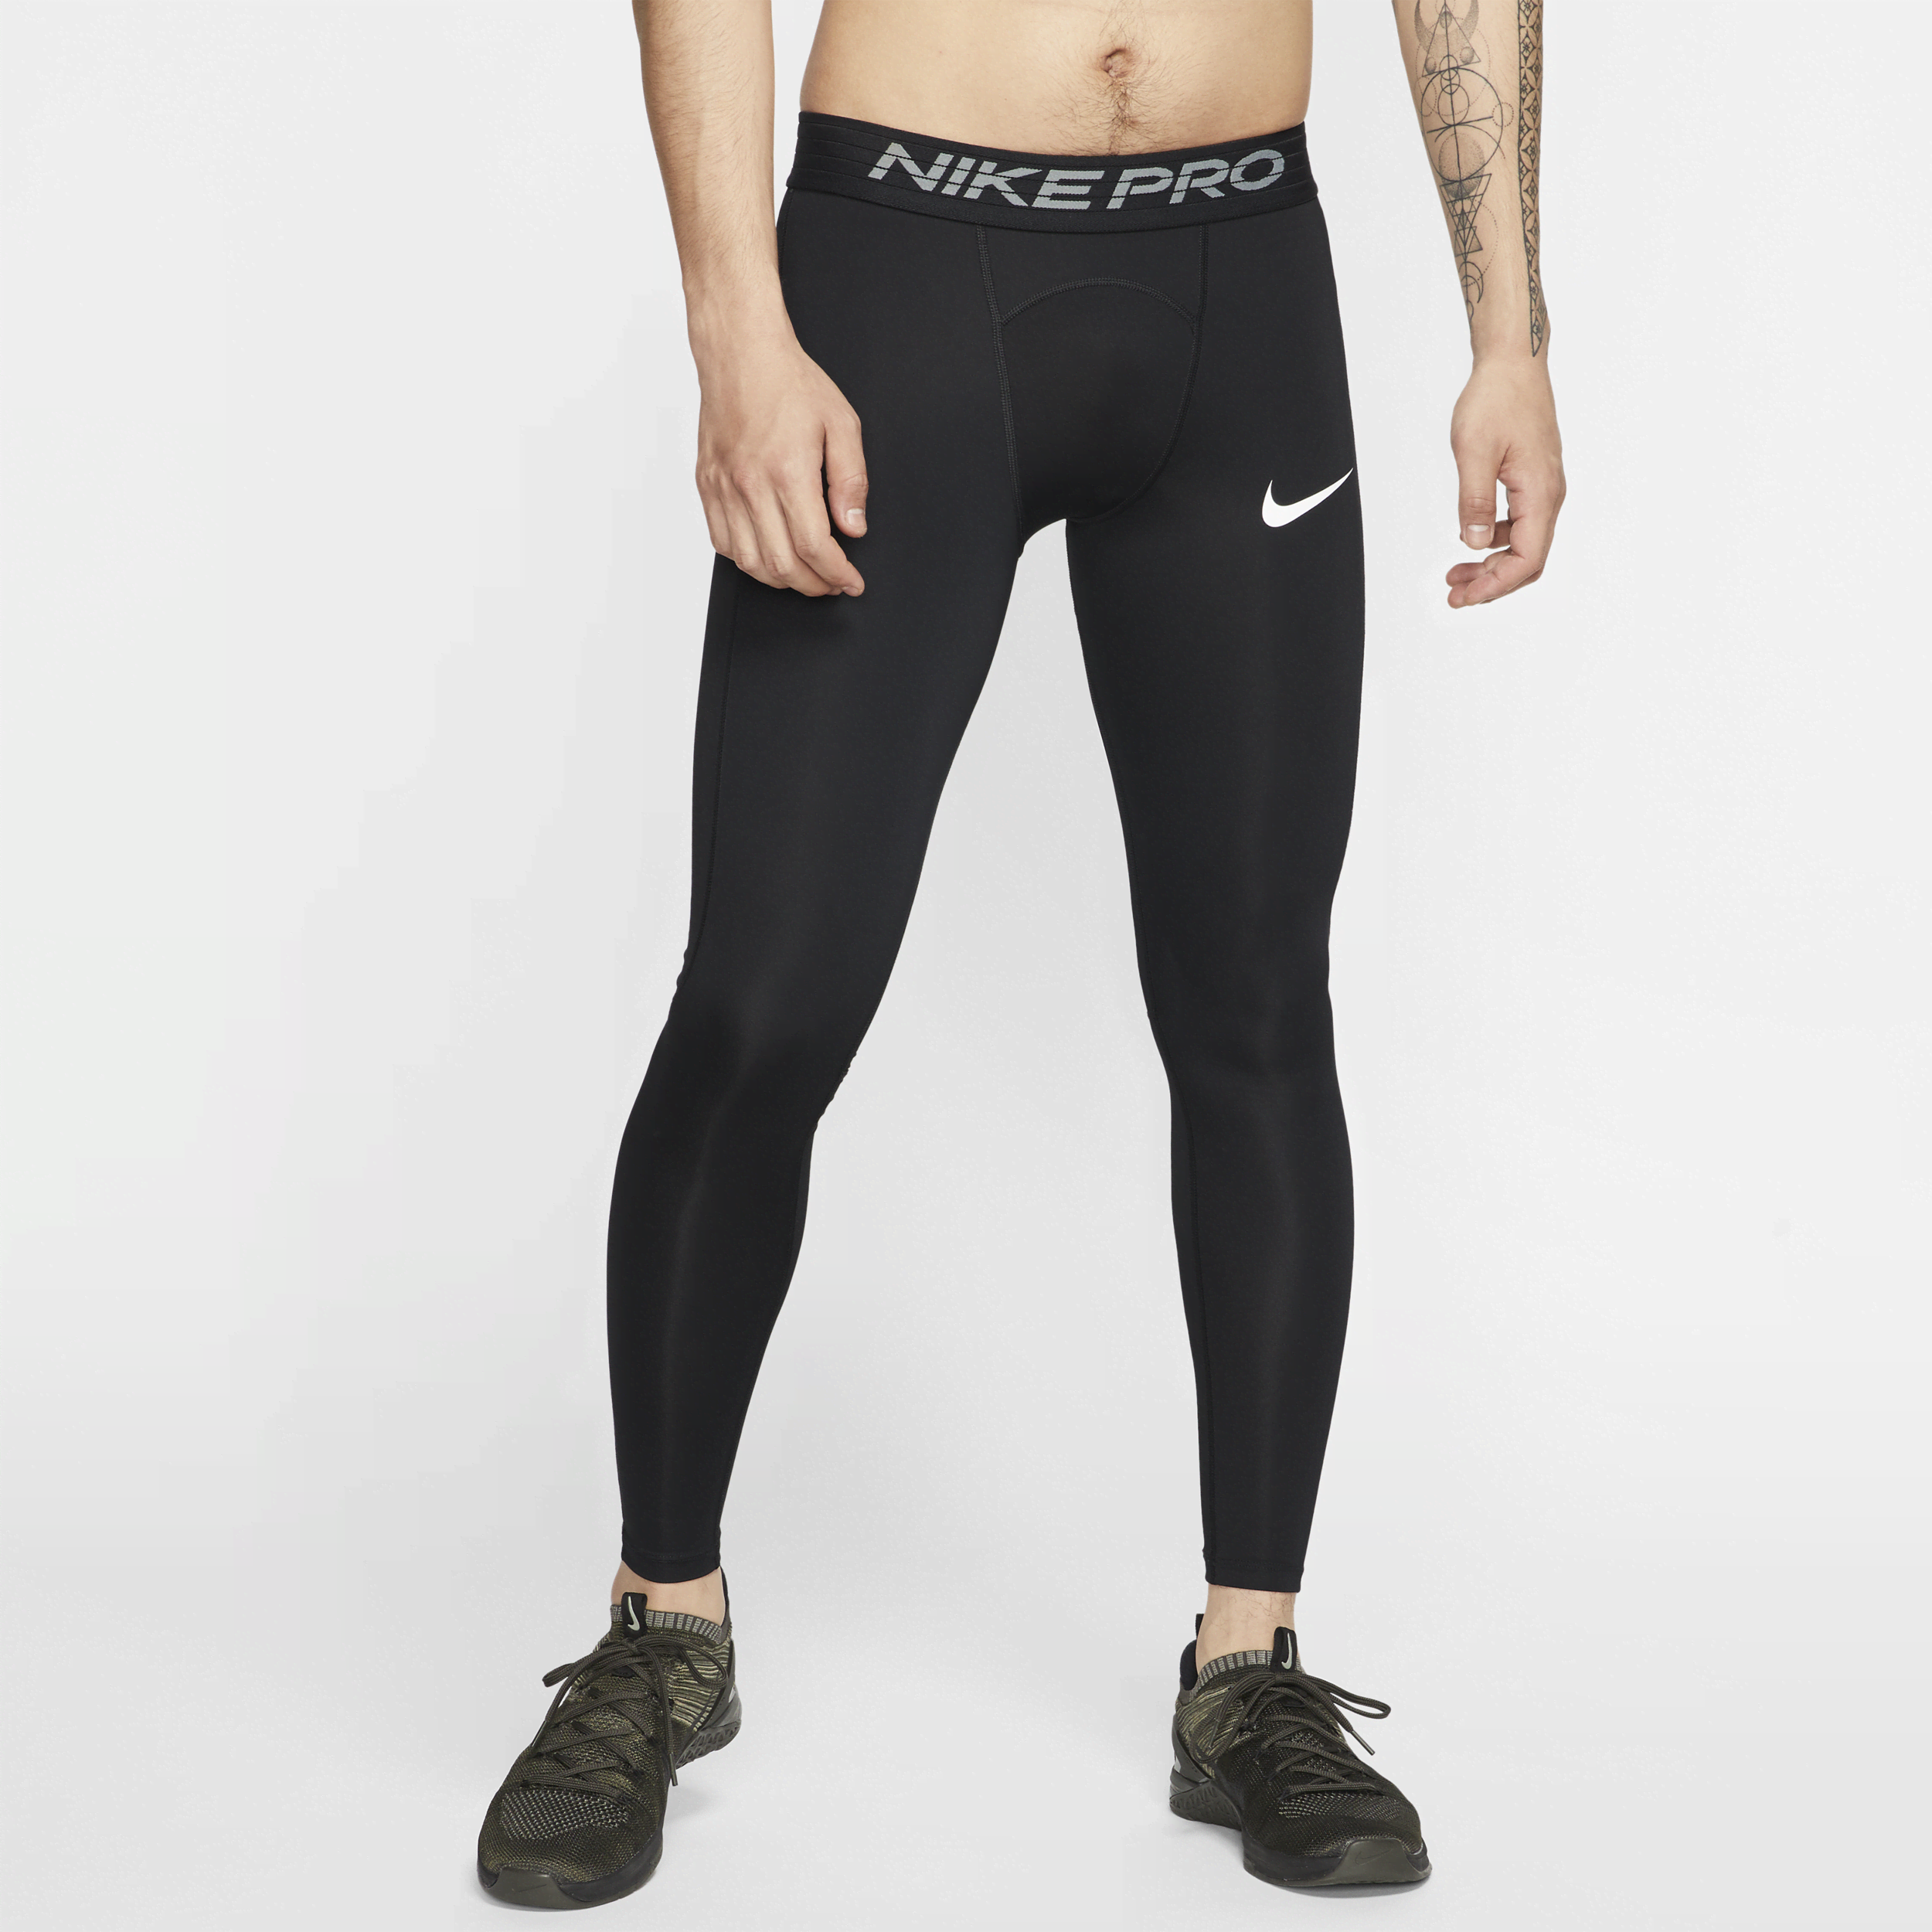 Тайтсы Nike Pro Training Tights (BV5641-451) купить по цене 1550